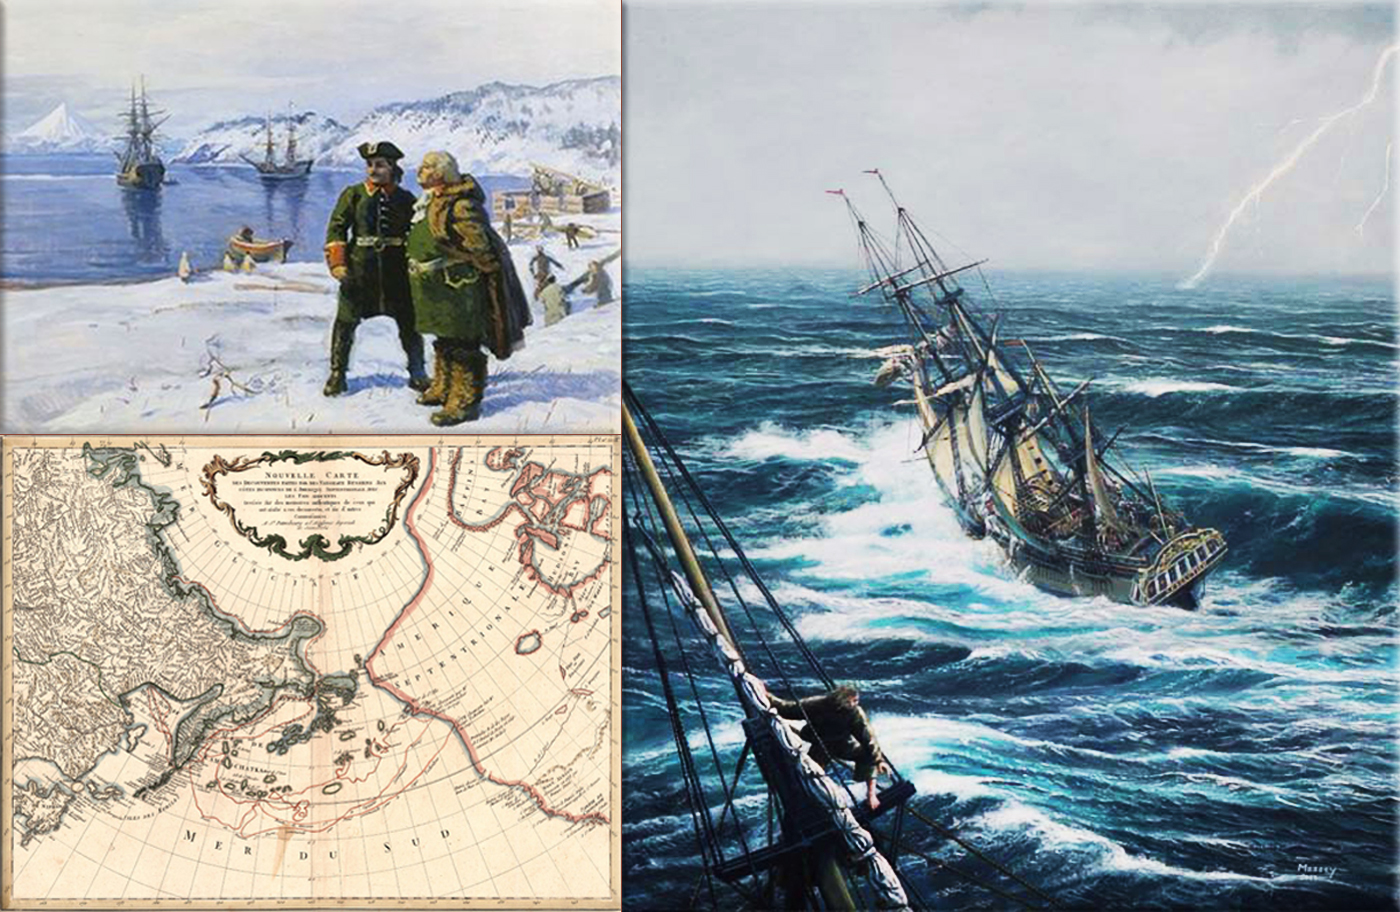 17 июля 1741 года – Команда Витуса Беринга увидела берега Аляски